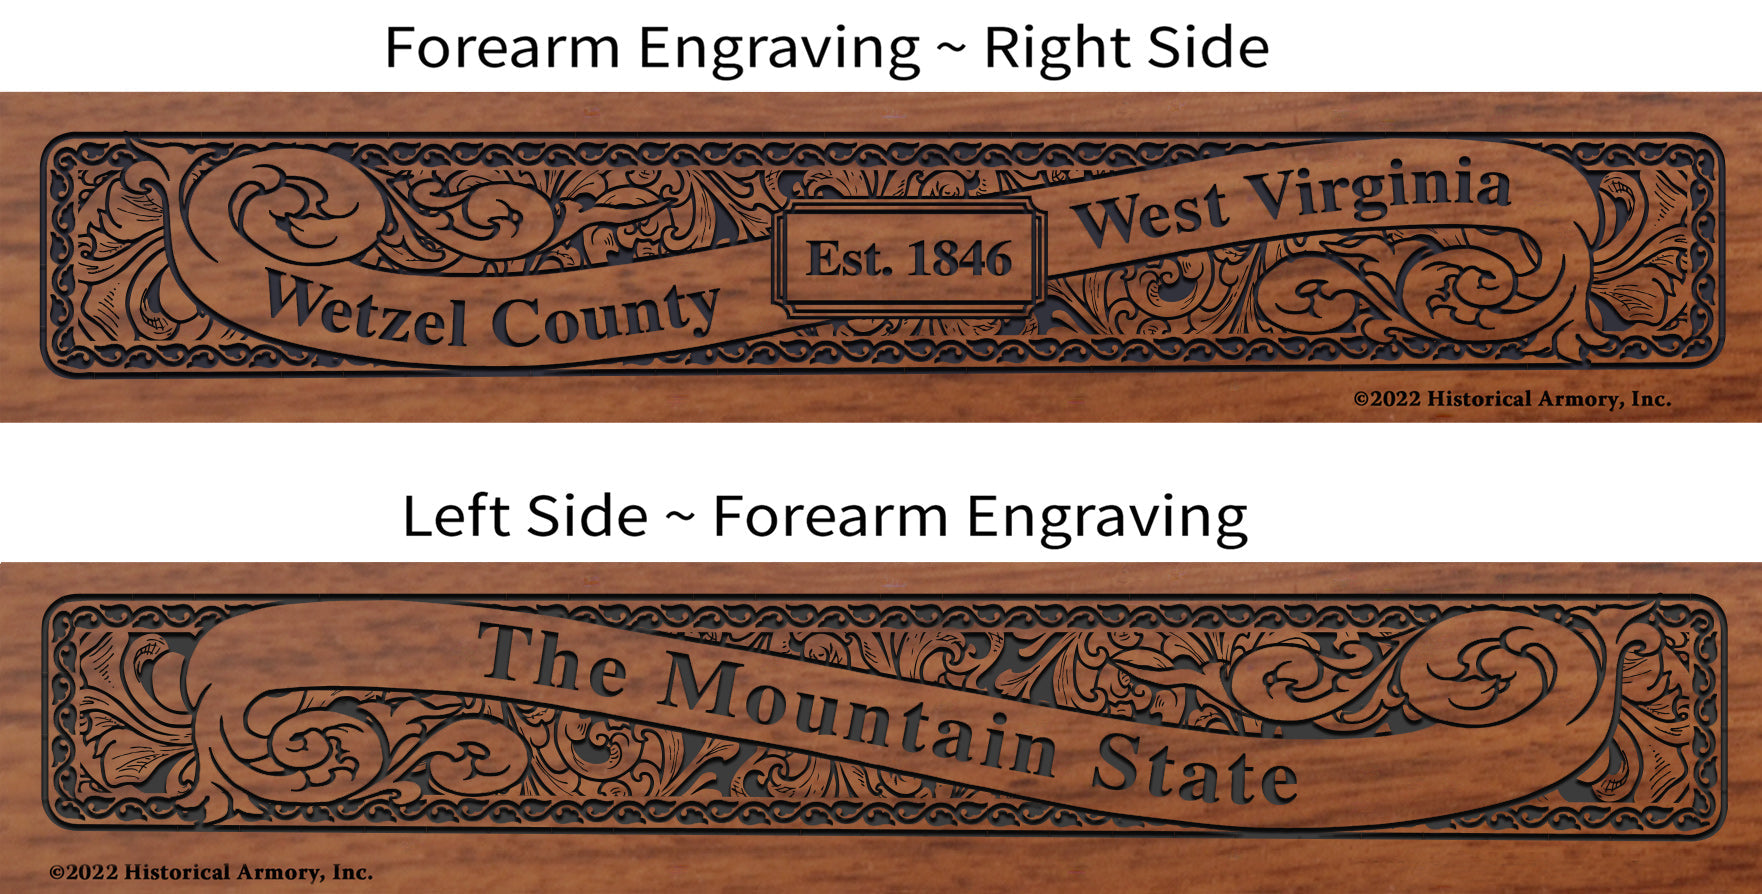 Wetzel County West Virginia Engraved Rifle Forearm